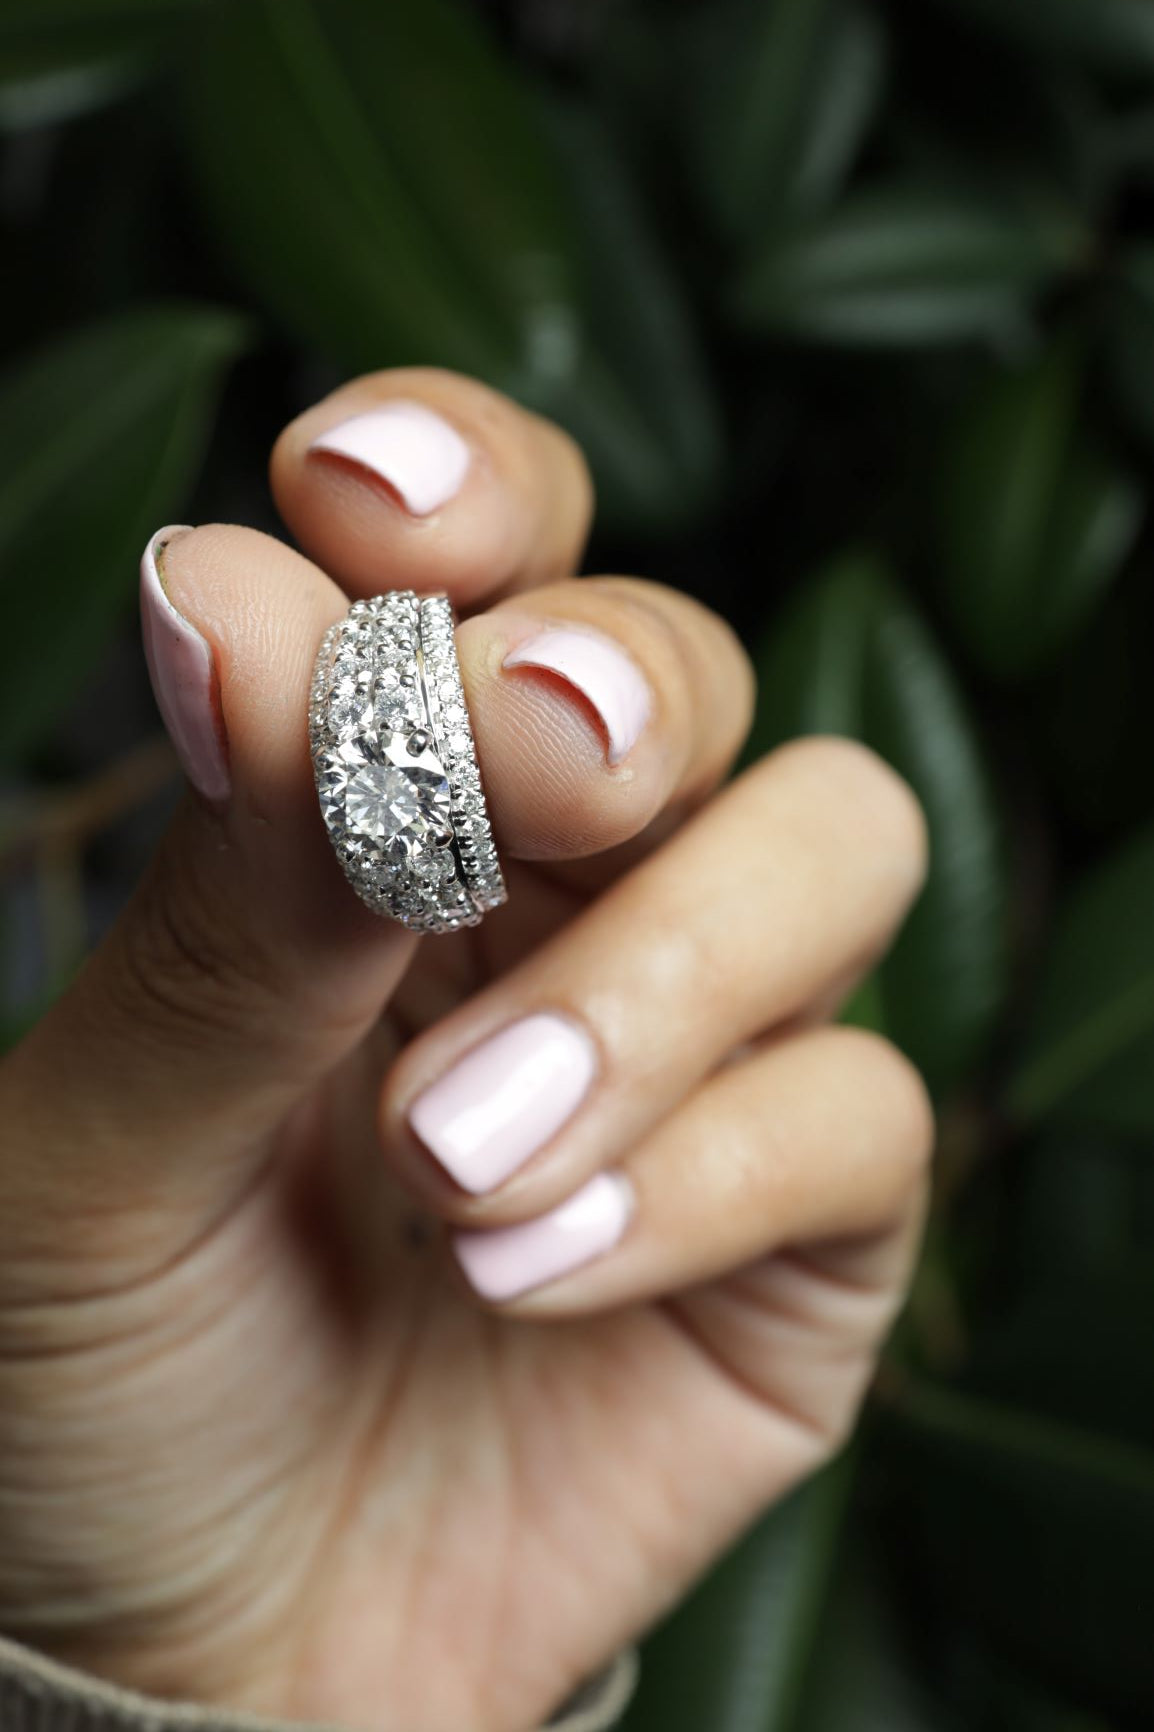 3.23 ctw GIA Certified Diamond Engagement Ring